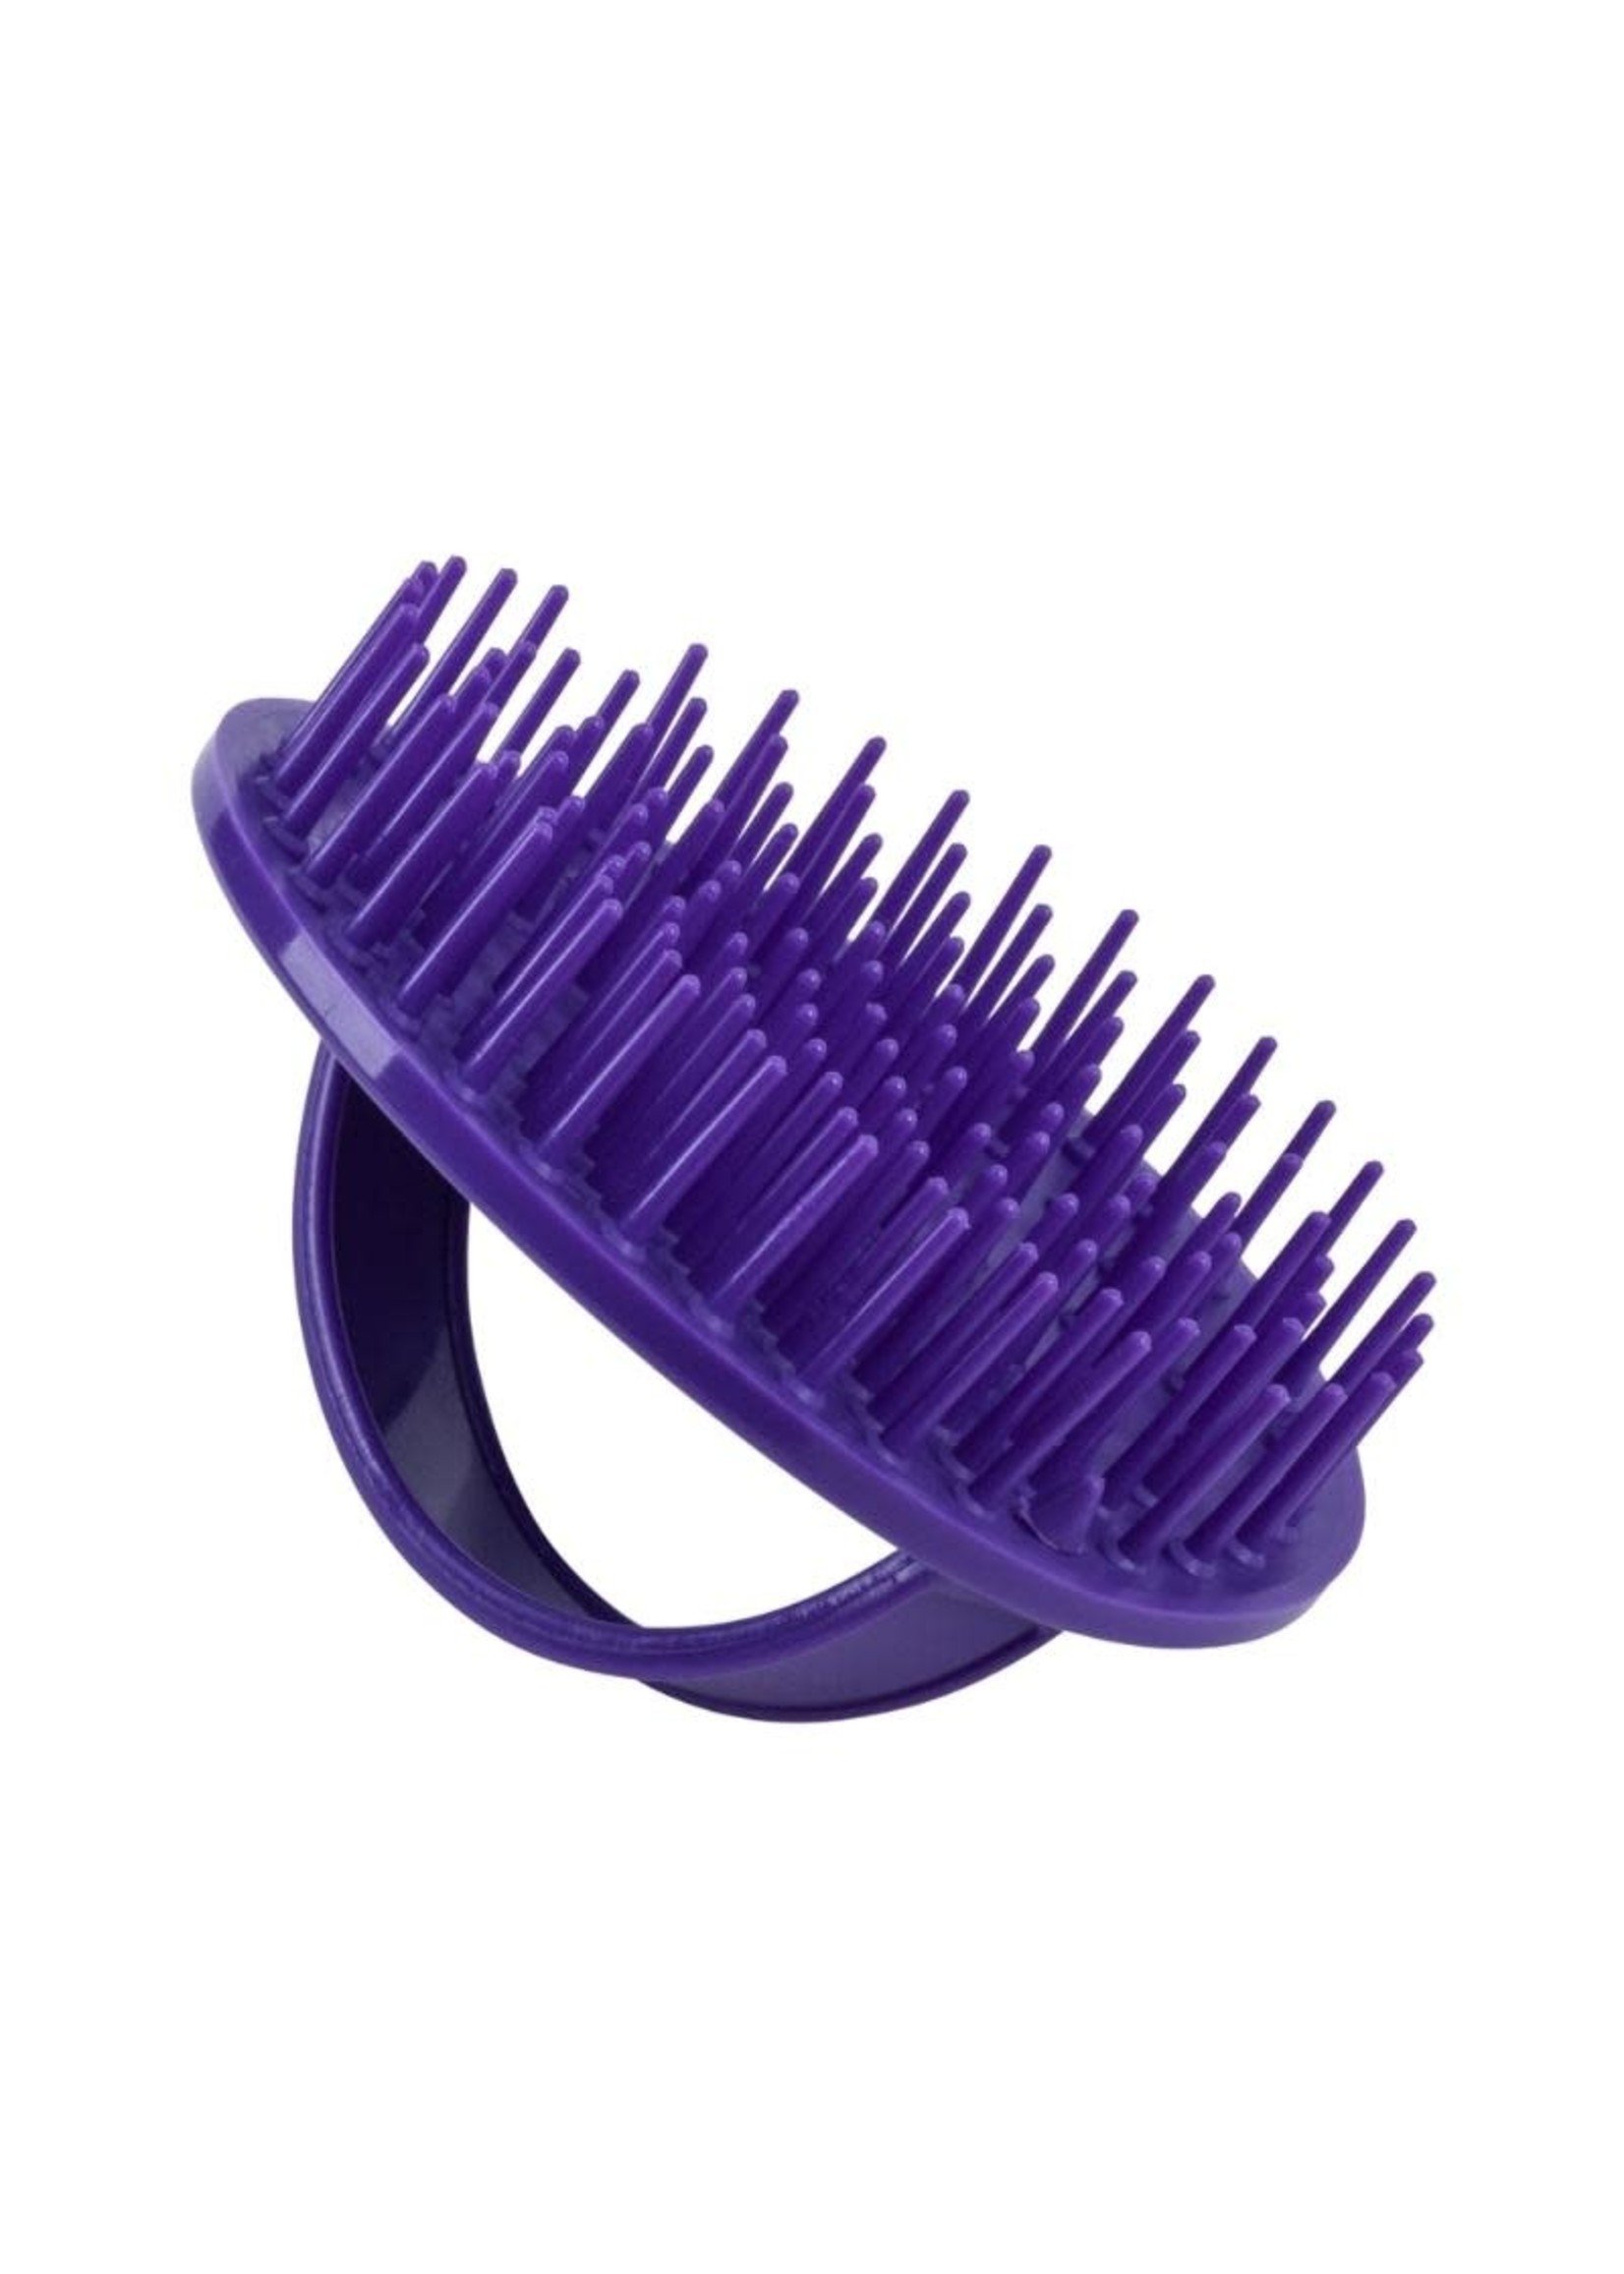 Denman Denman D6 Be-Bop Brights Scalp Massage Brush - Purple